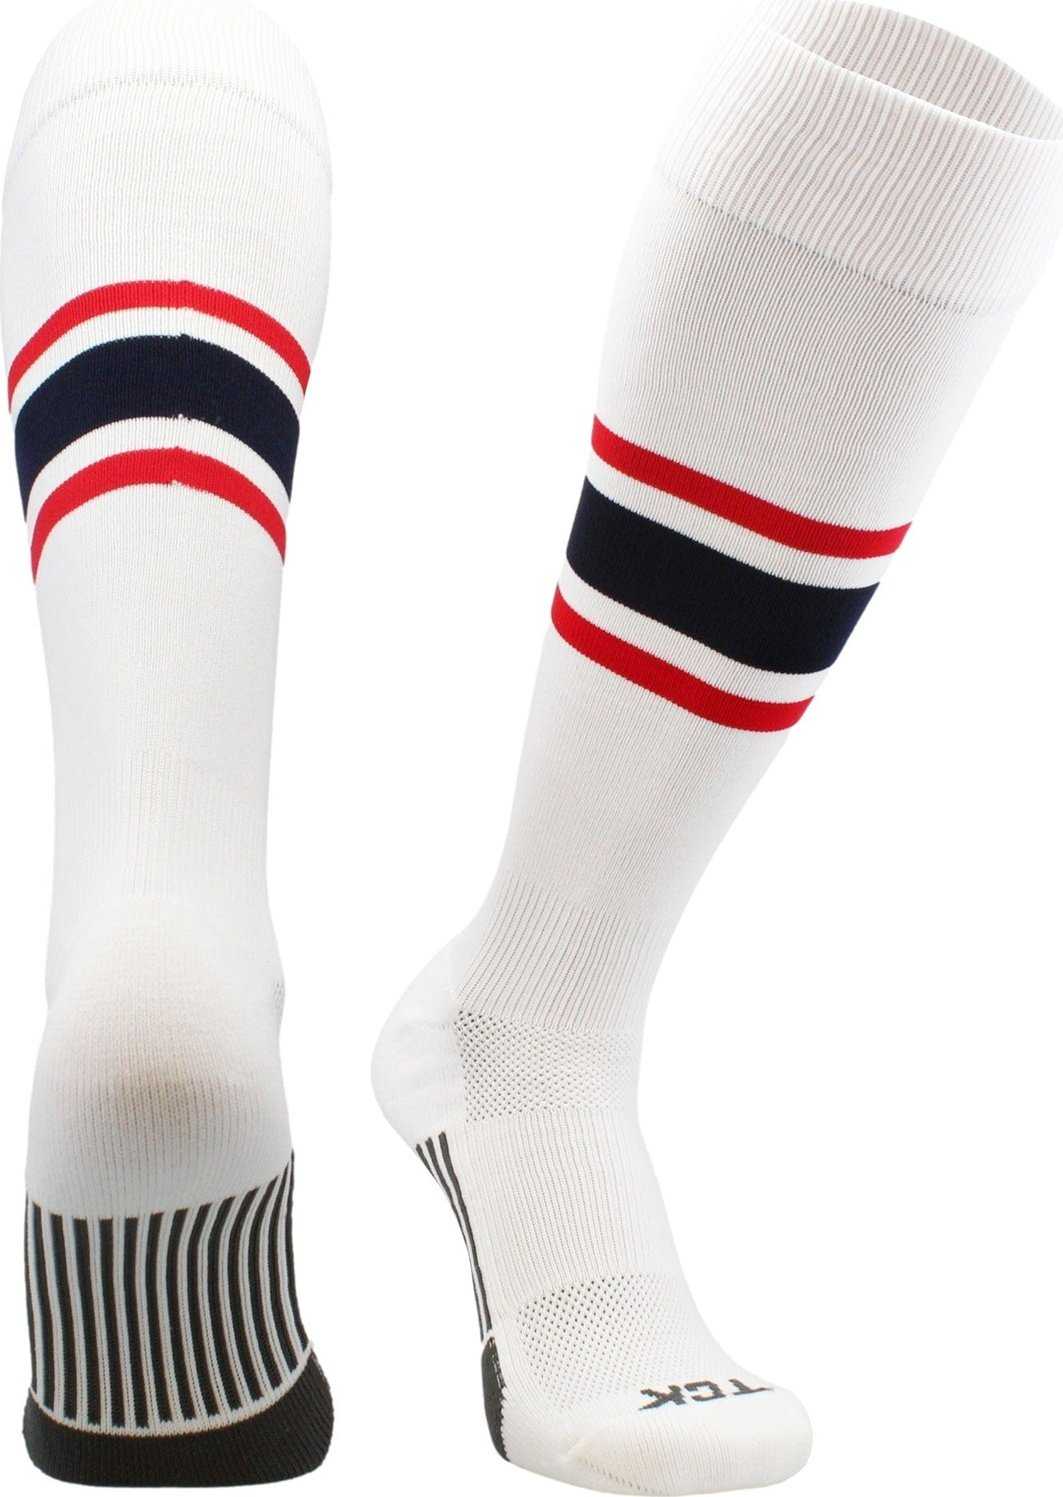 TCK Dugout Knee High Socks - White Scarlet Navy - HIT a Double - 1